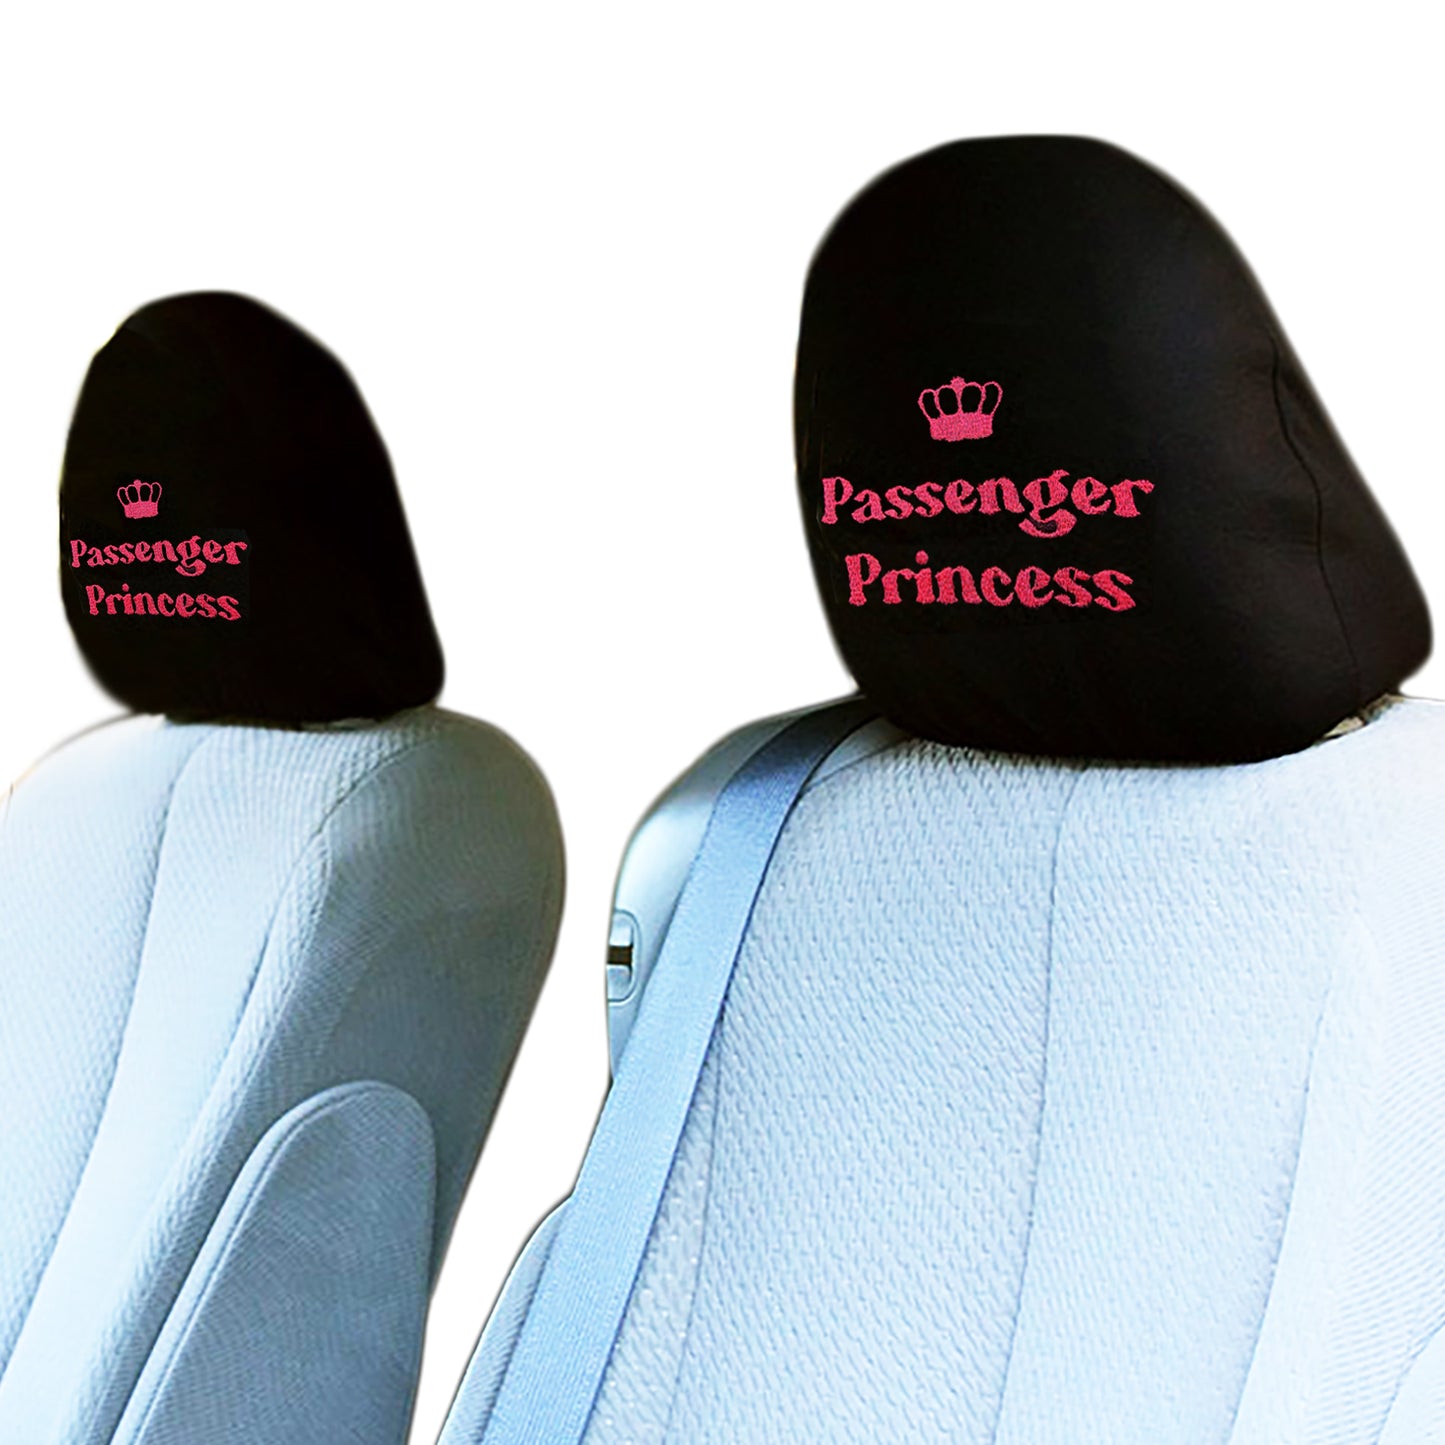 Passenger Princess Design image pair